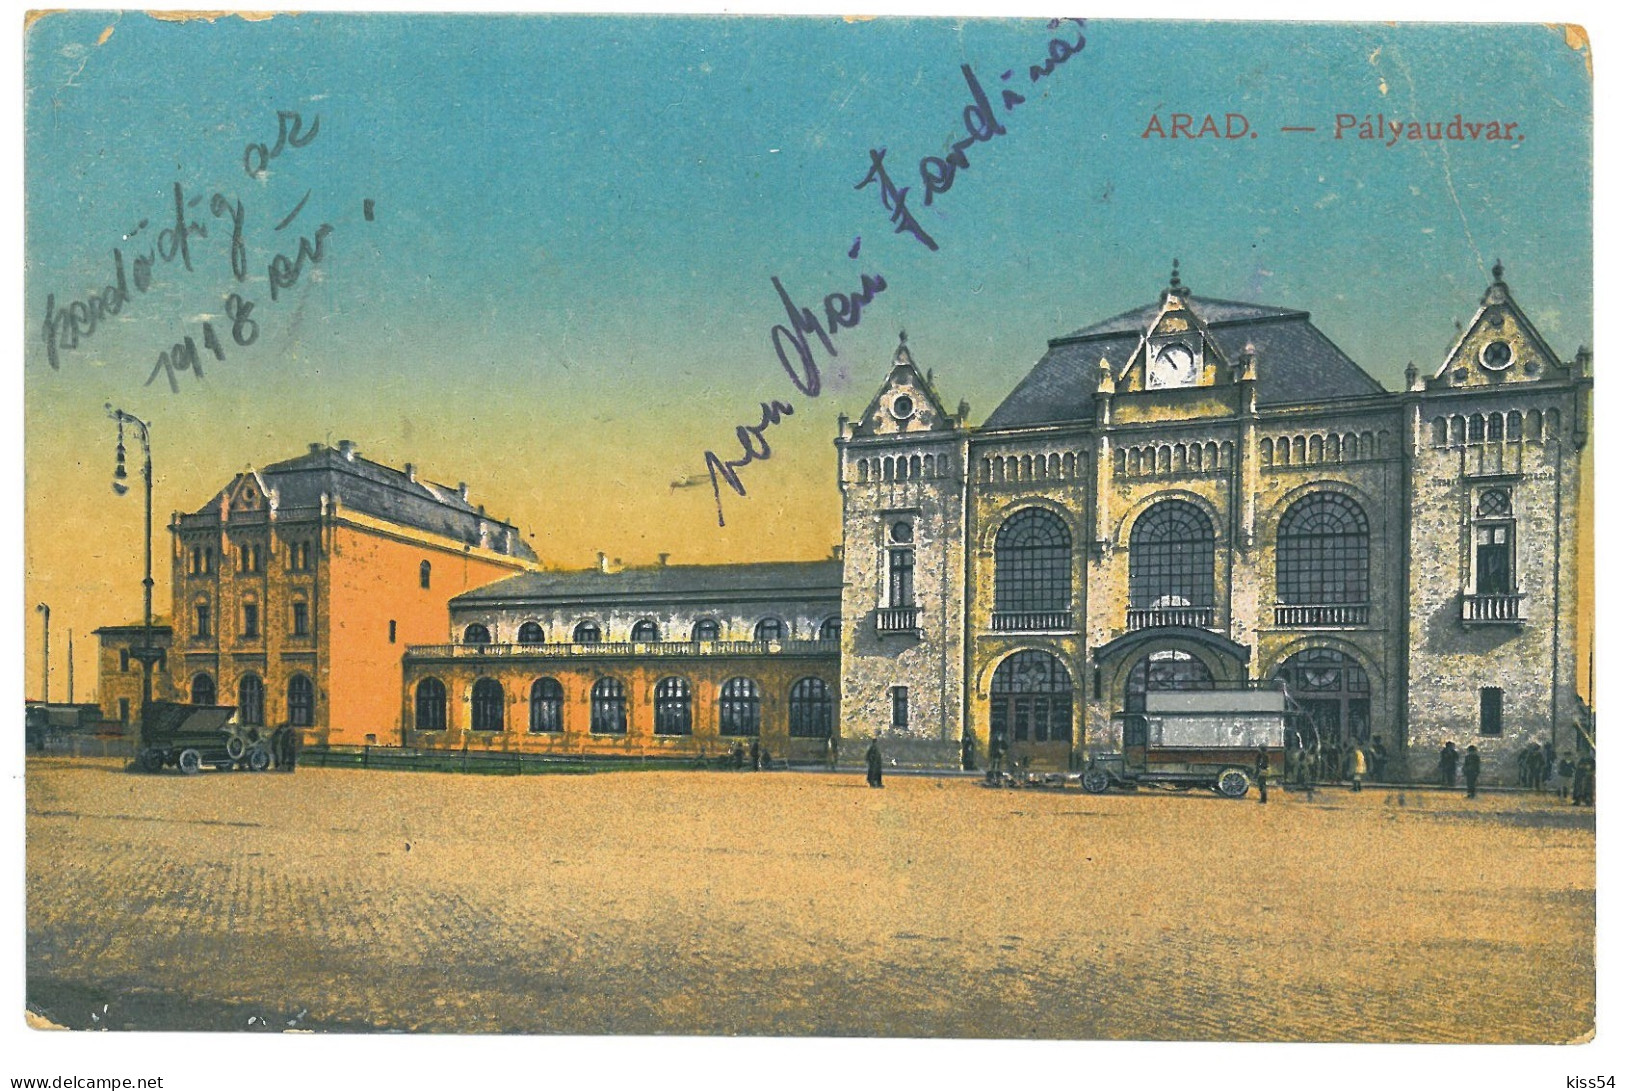 RO 52 - 20319 ARAD, Railway Station, Omnibus, Romania - Old Postcard - Used - 1918 - Romania